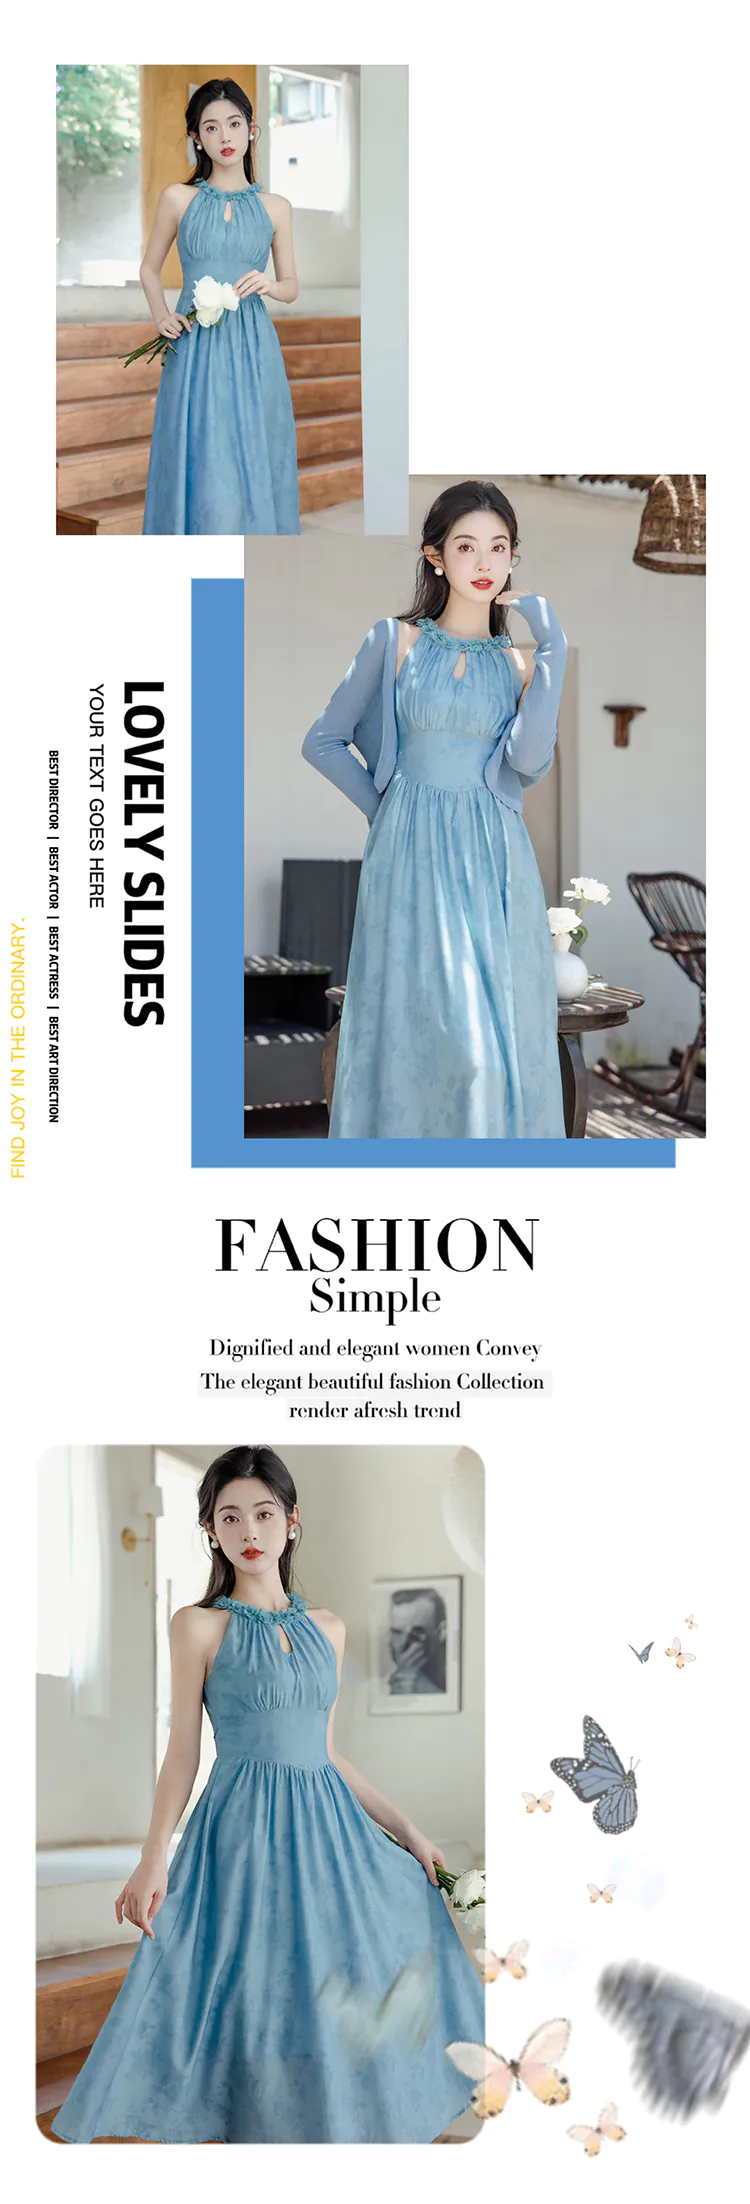 Sweet-Soft-Blue-Flower-Printed-Chiffon-Casual-Dress-with-Cardigan-Set11